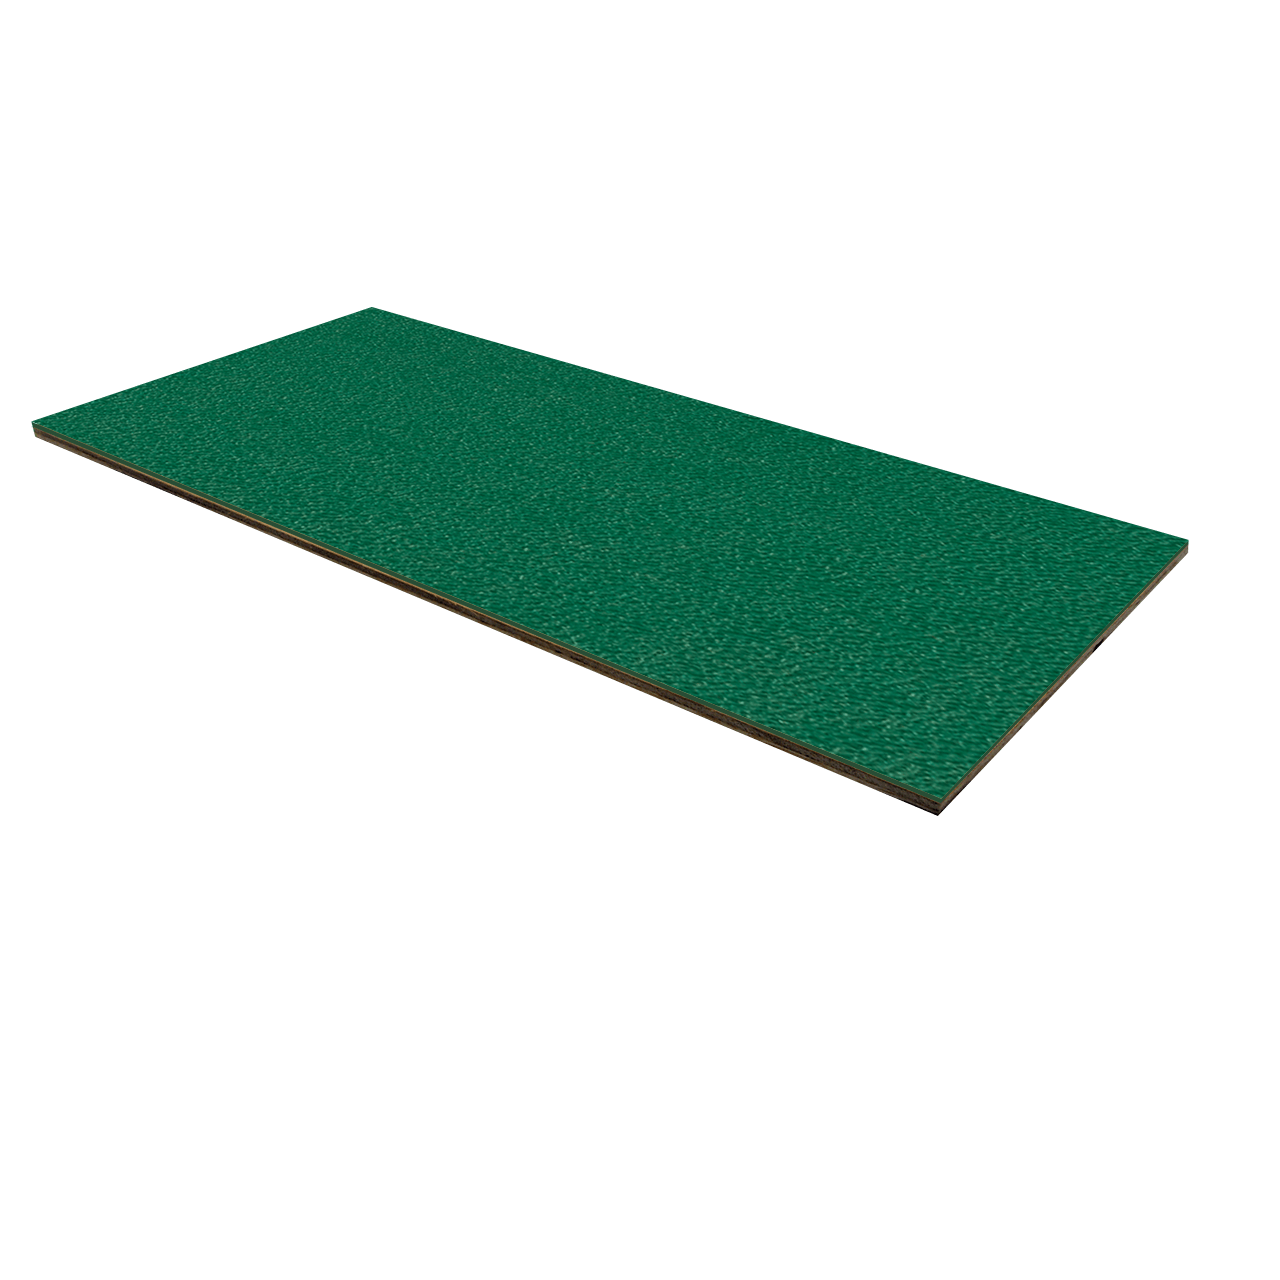 1/8" Luan Plywood ABS Laminate - Green